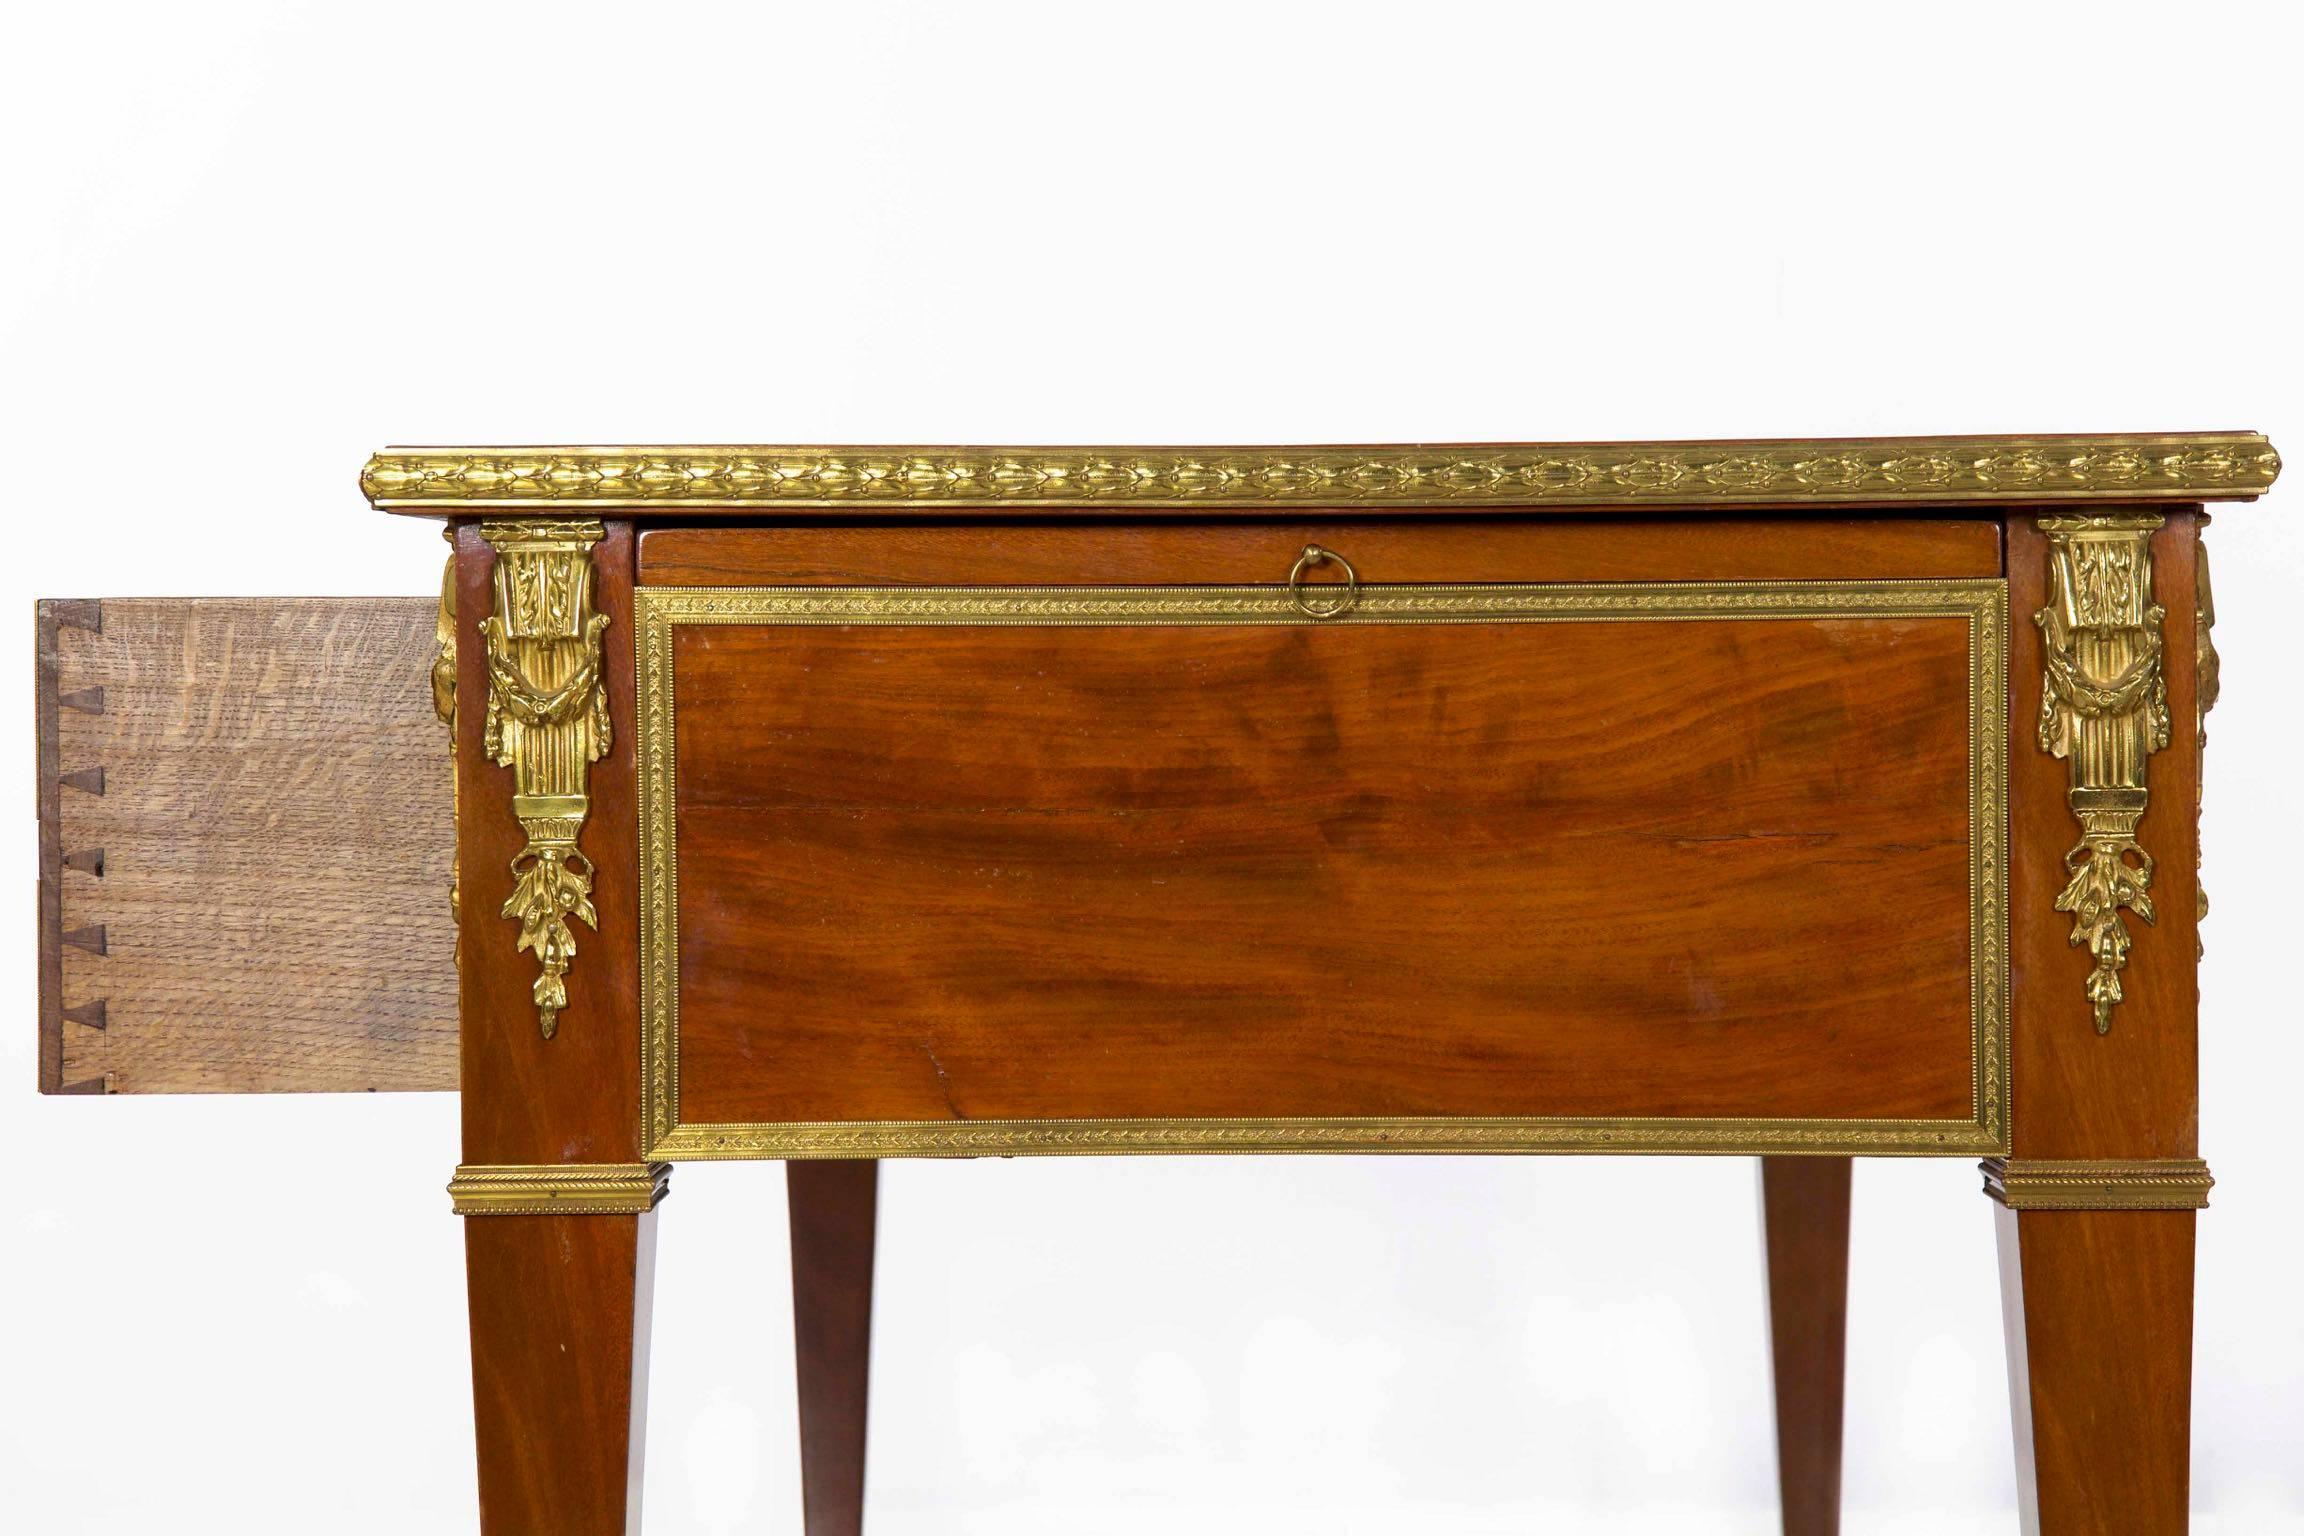 19th Century Neoclassical Mahogany & Ormolu-Mounted Antique Writing Desk Bureau Plat, France